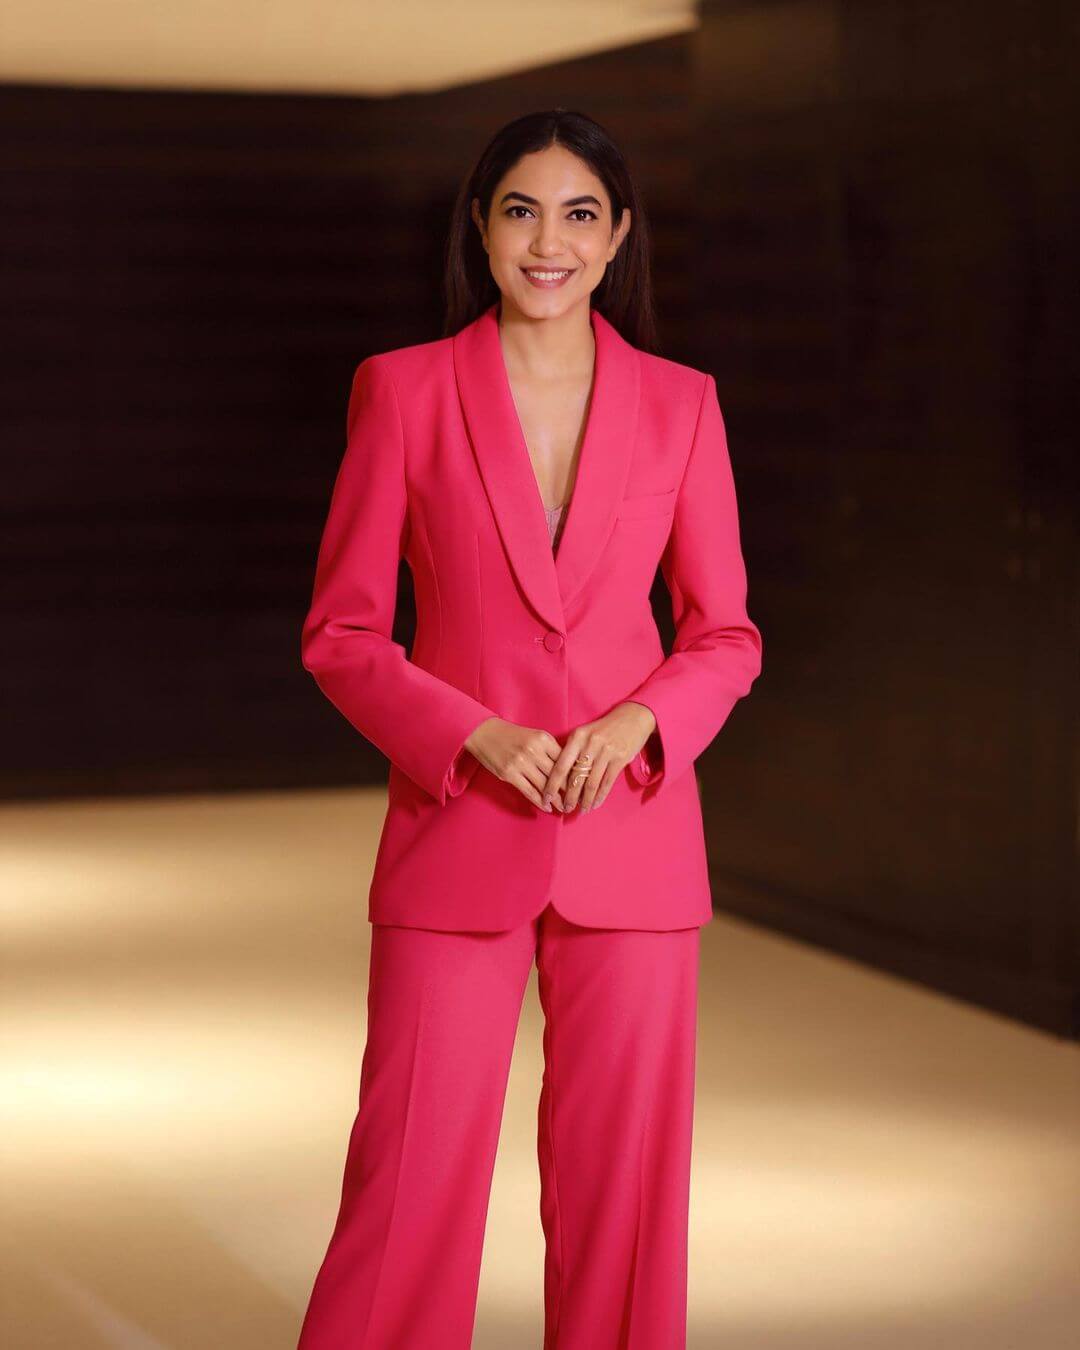 Ritu Varma Chic & Vibrant Look In Hot Pink Blazer & Pants With Sleek Open Hairs